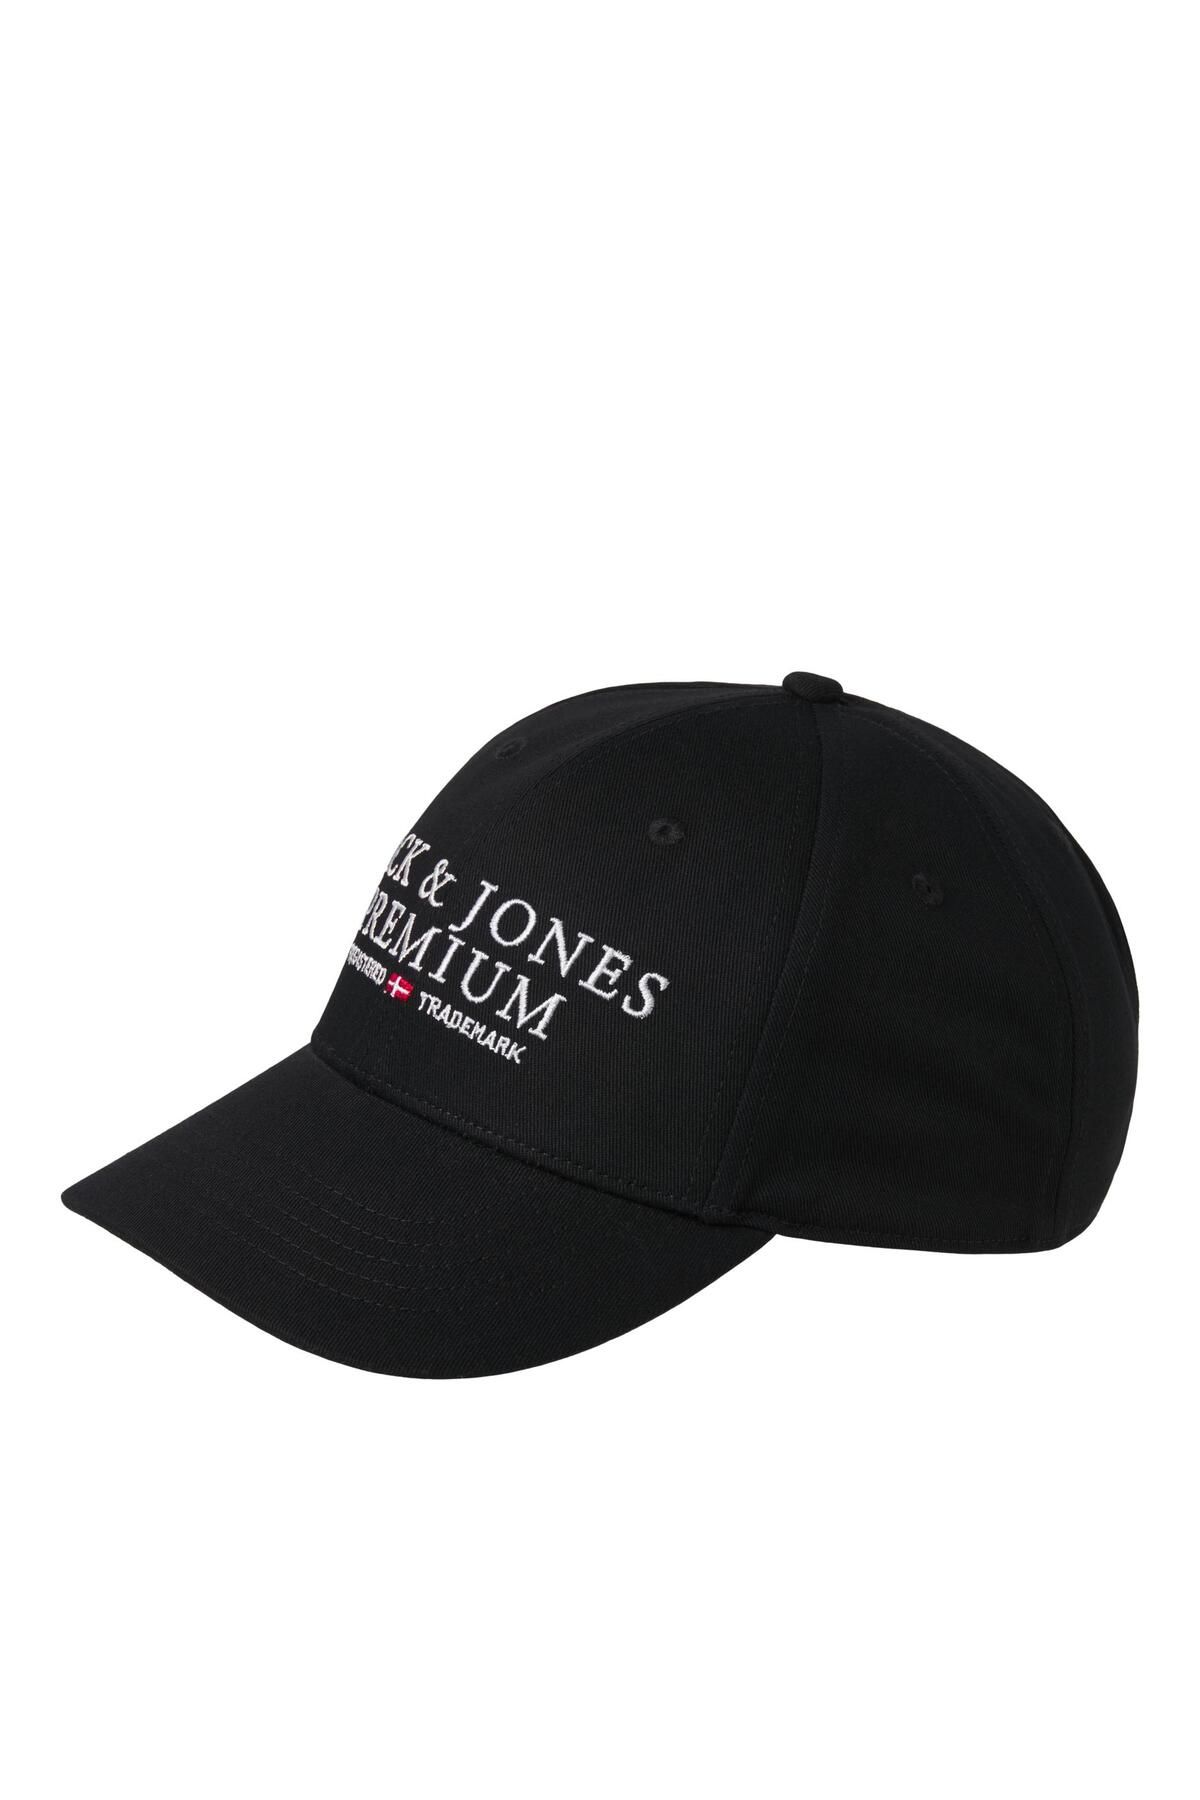 Jack & Jones Jack Jones Jacarchıe Cap Erkek Siyah Şapka 12255403-02